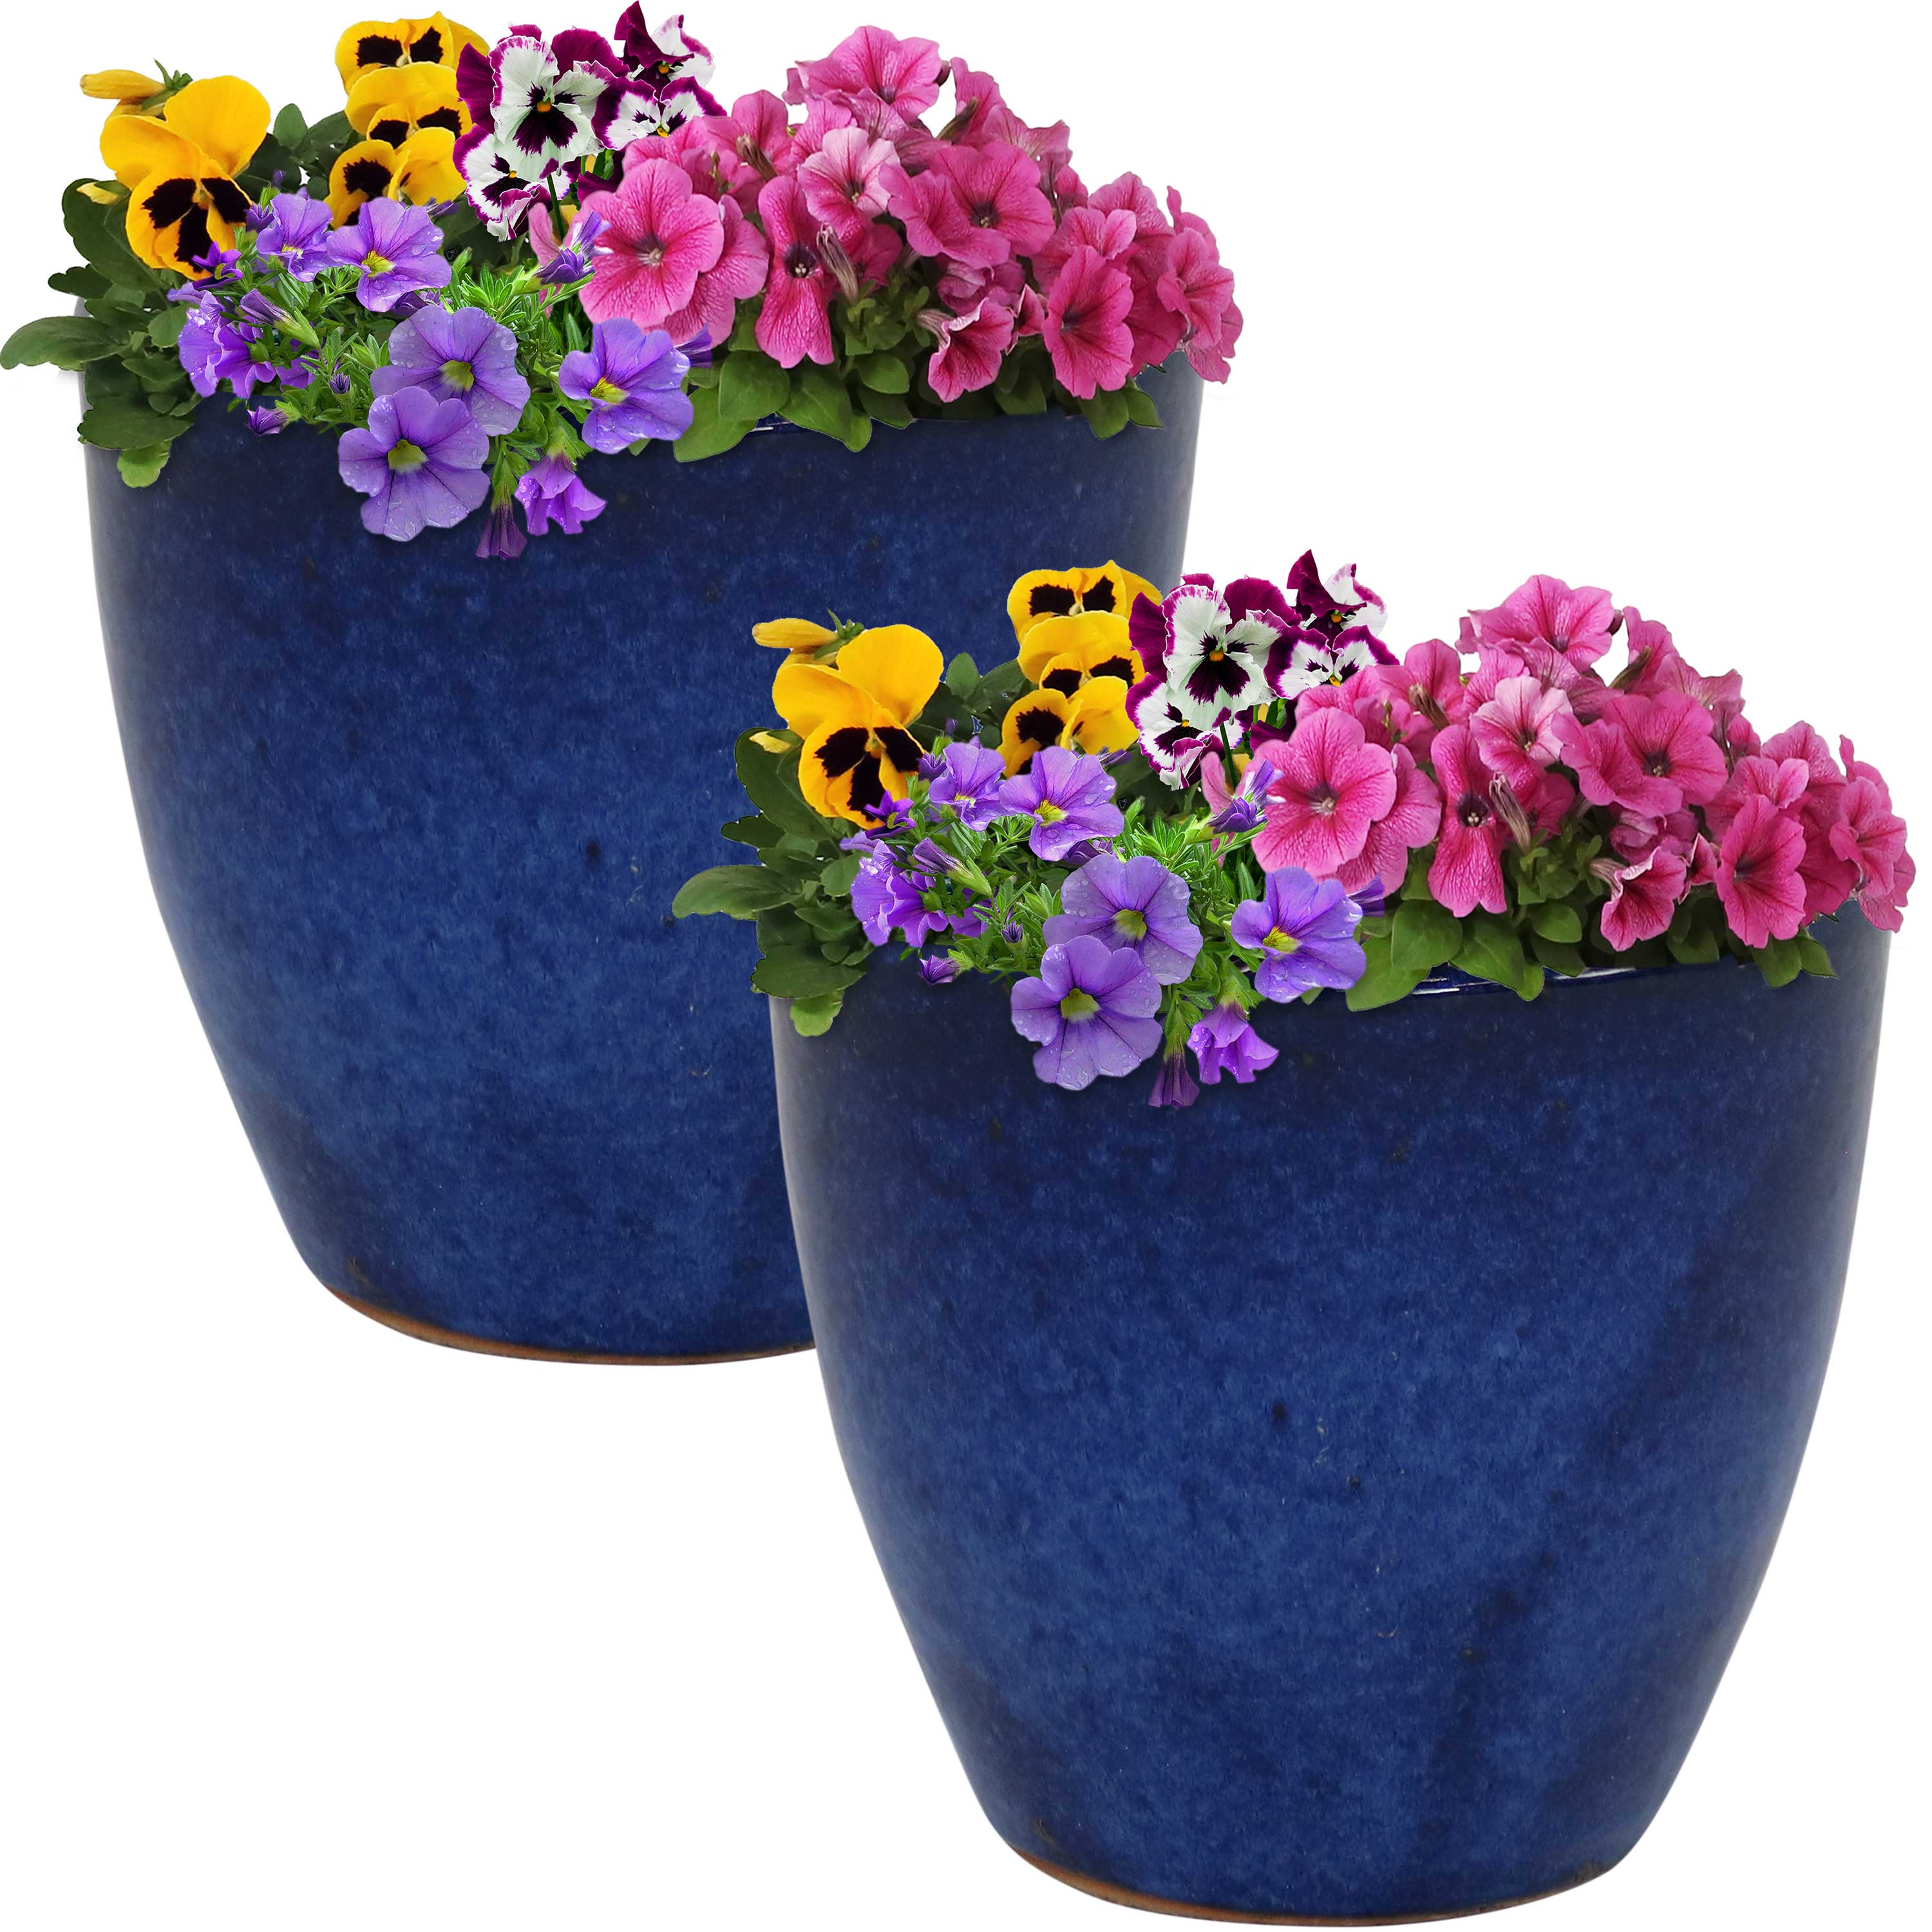 Sunnydaze Resort Ceramic Indoor/Outdoor Planter - Imperial Blue - 8-Inch - Set of 2